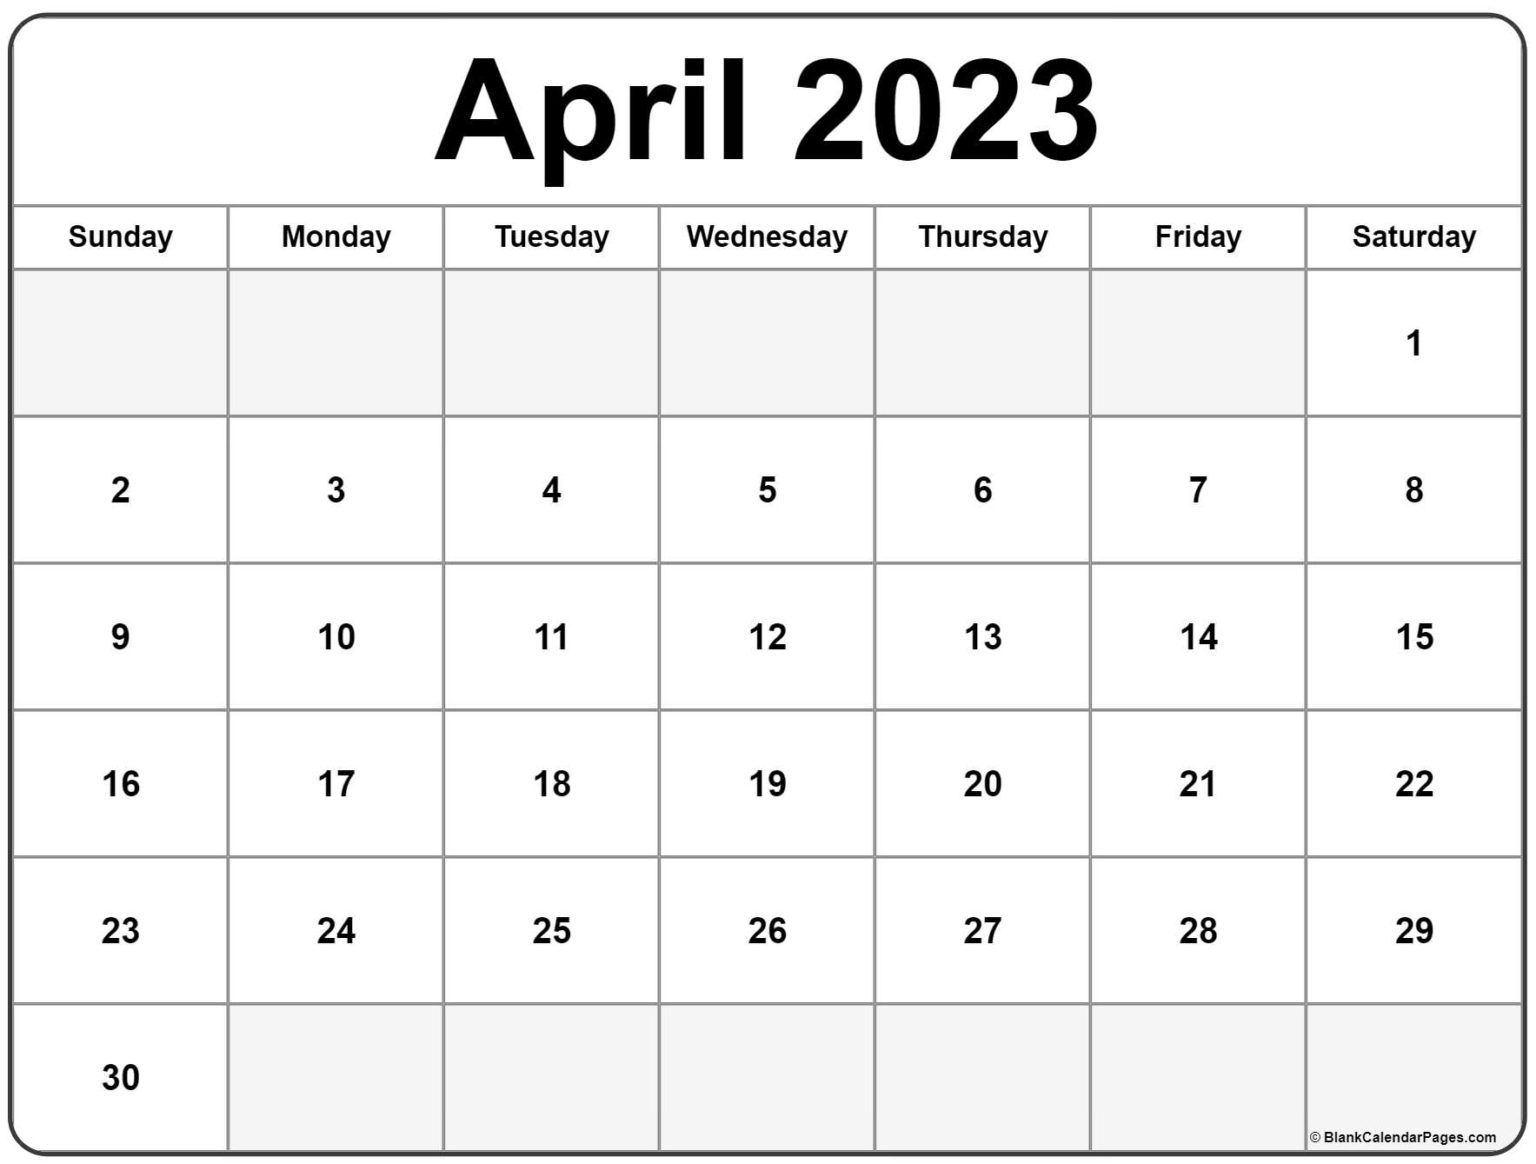 Get Printable Calendar April 2022 To March 2023